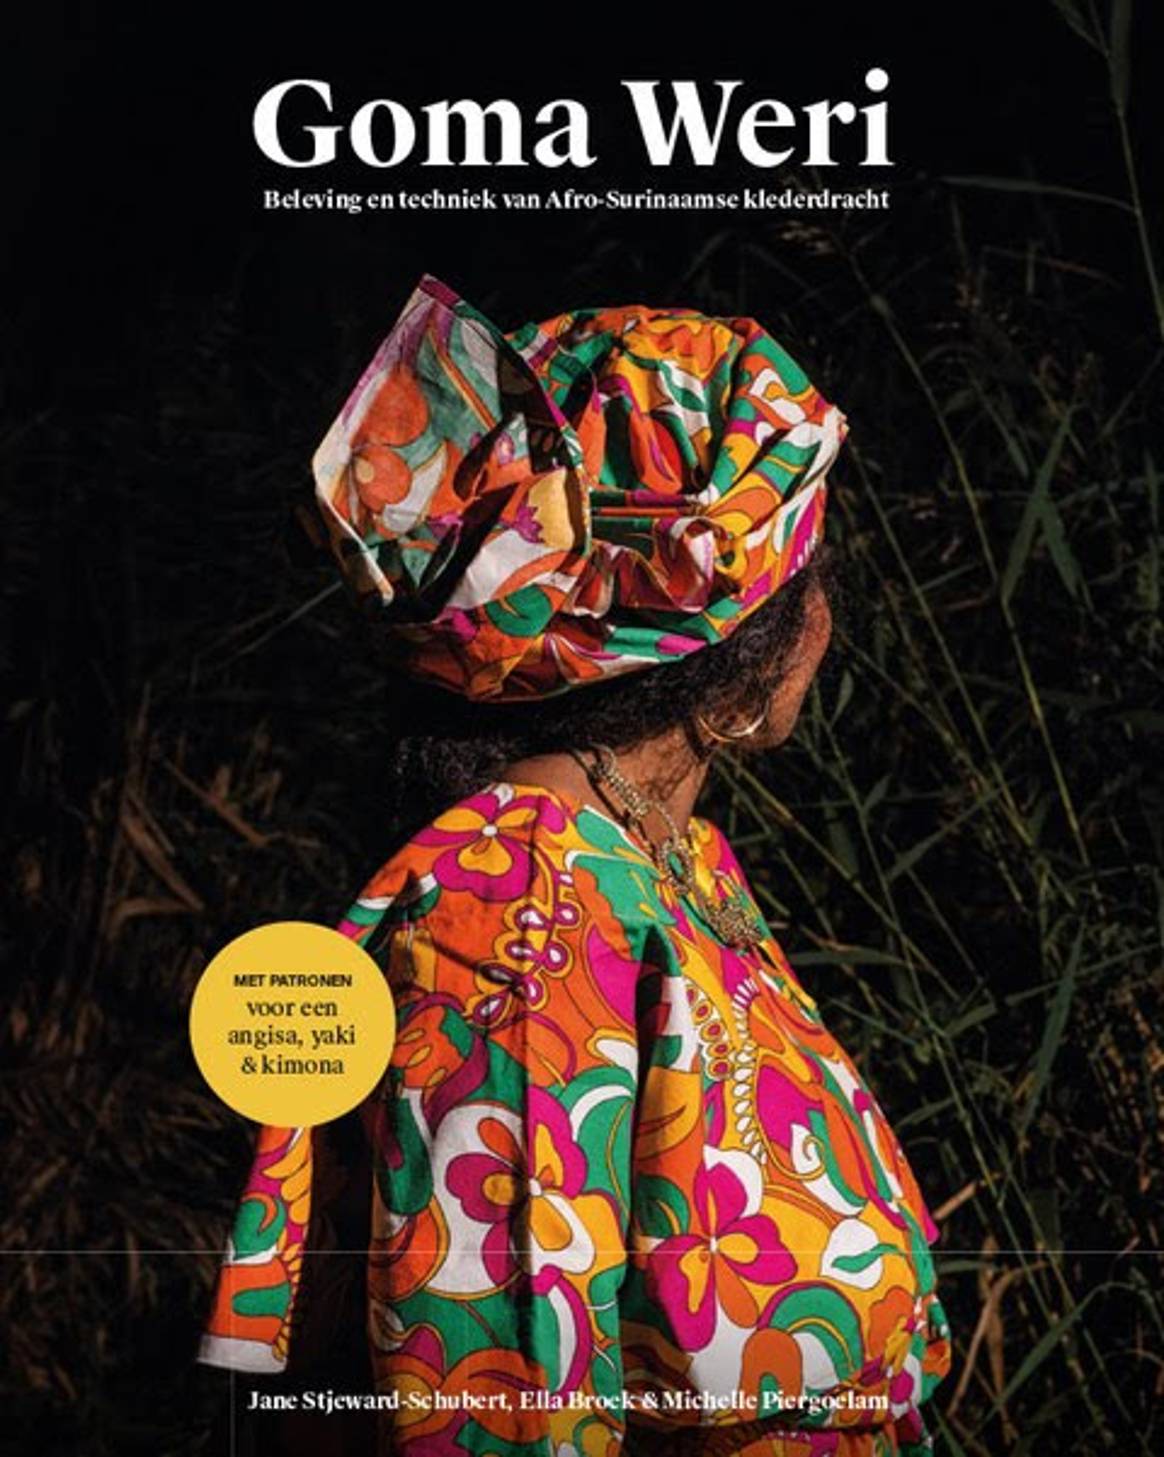 De cover van 'Goma Weri'. Beeld: LM Publishers